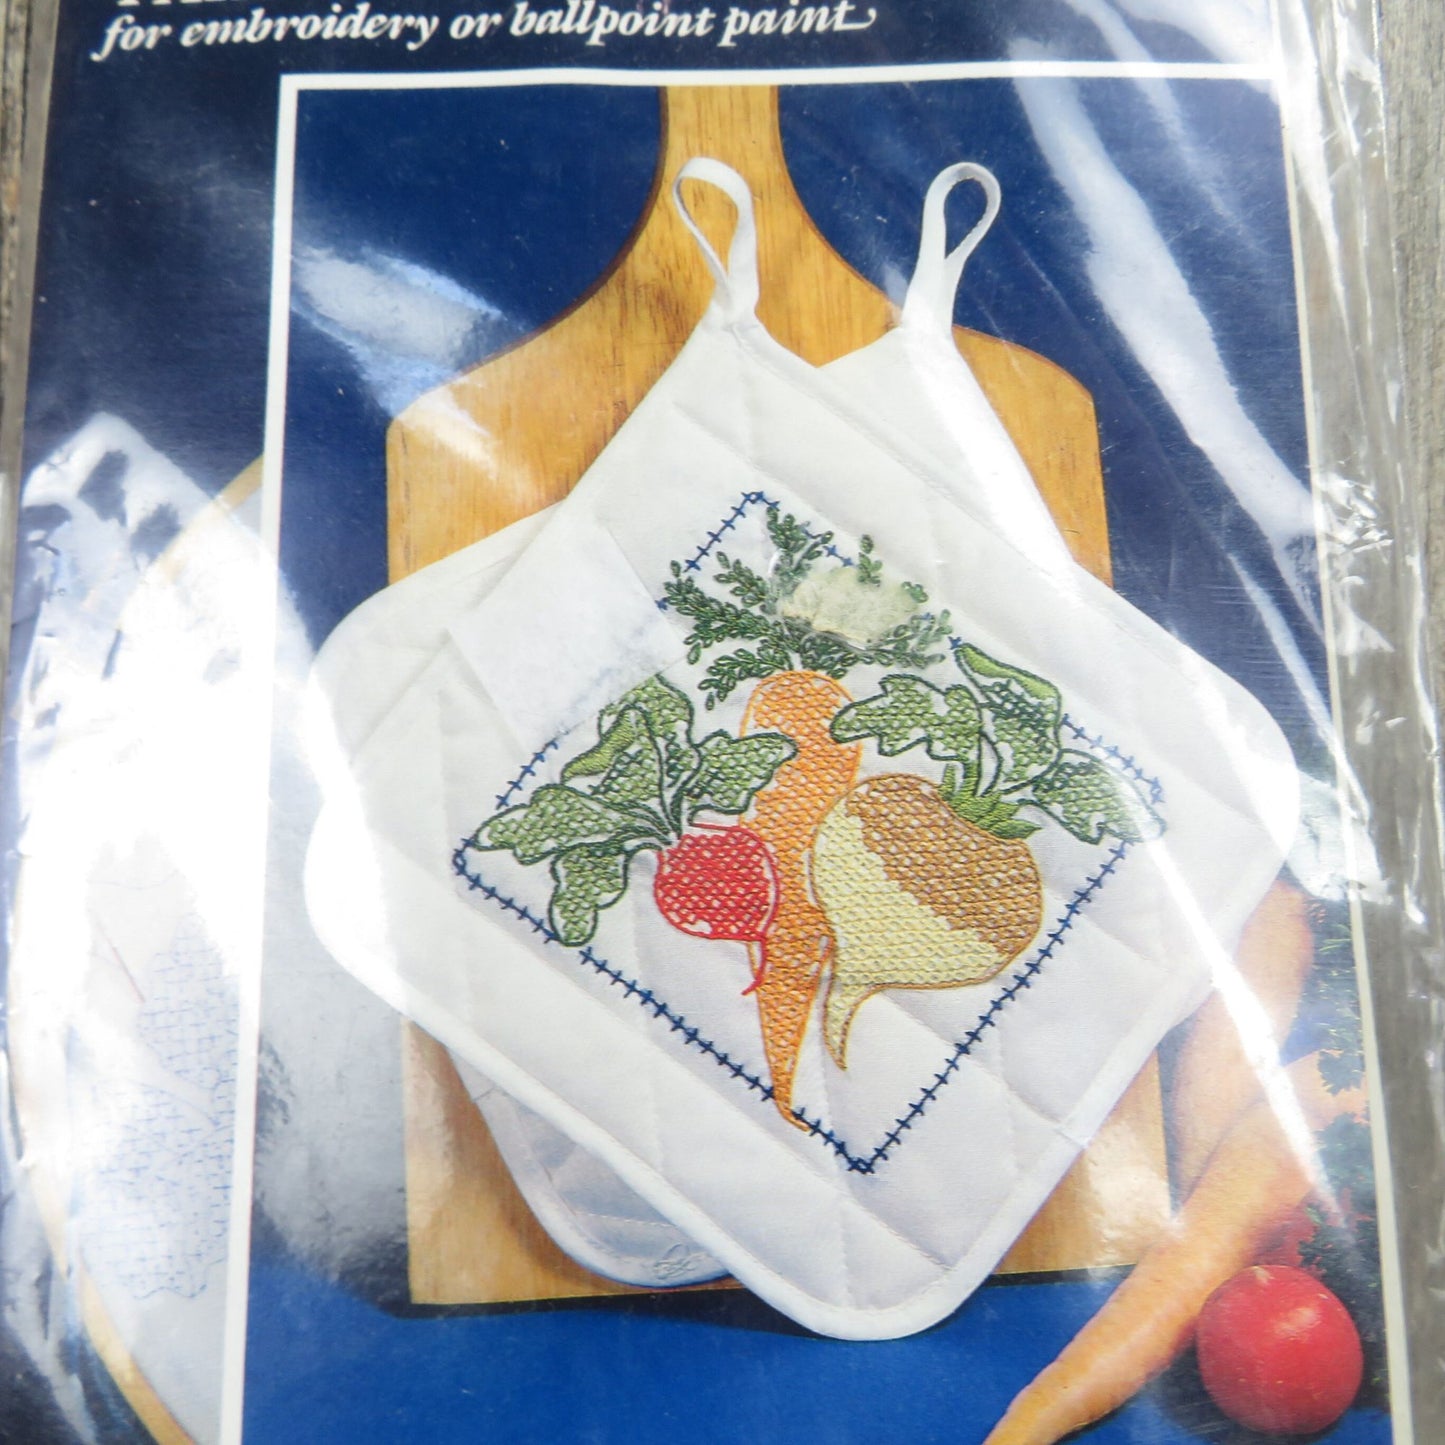 Potholder Embroidery Kit Vegetables Vogart Ballpoint Paint Gift Needlecraft Housewarming